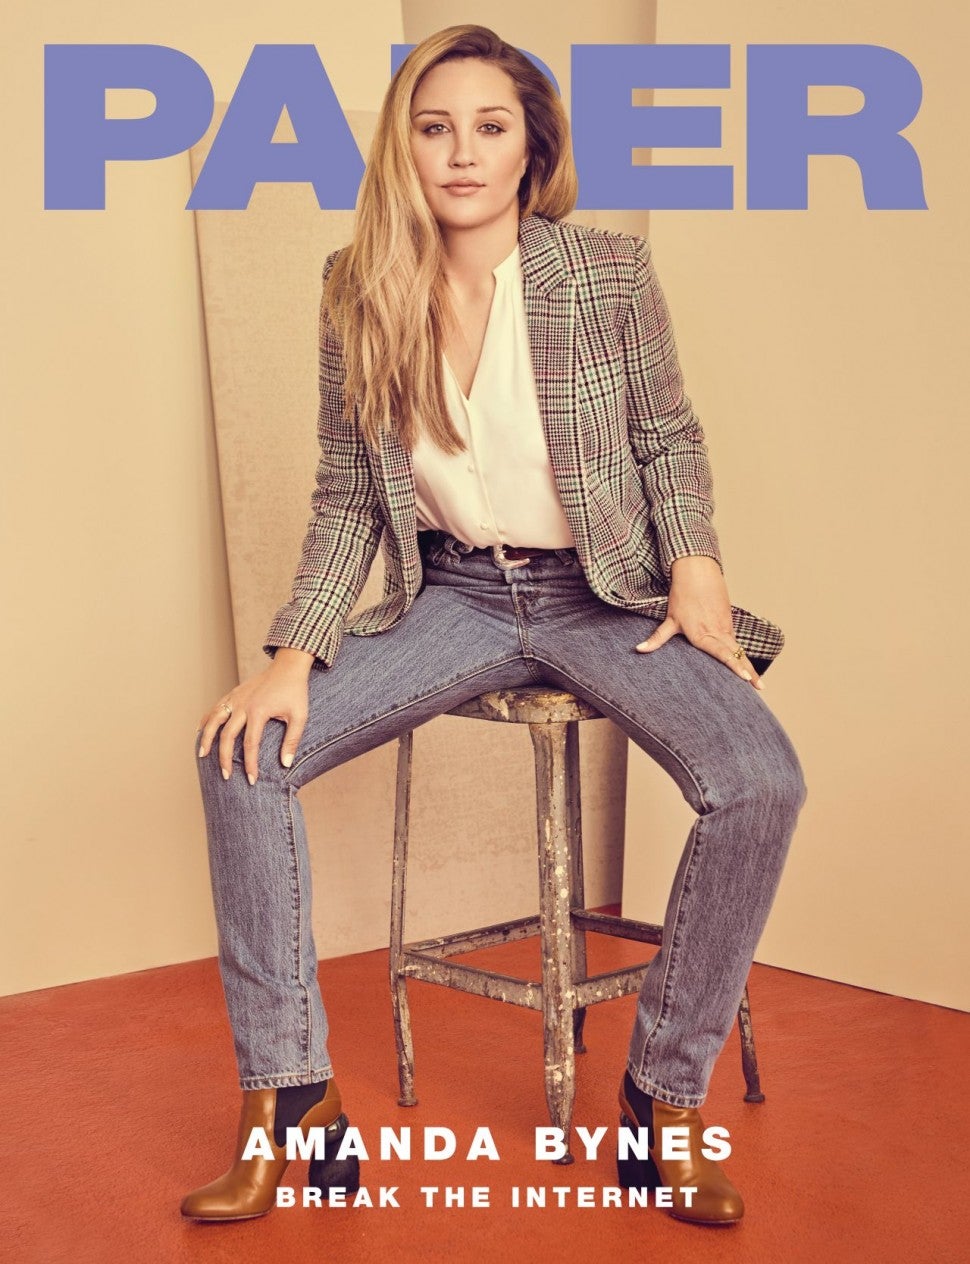 Amanda Bynes for PAPER magazine